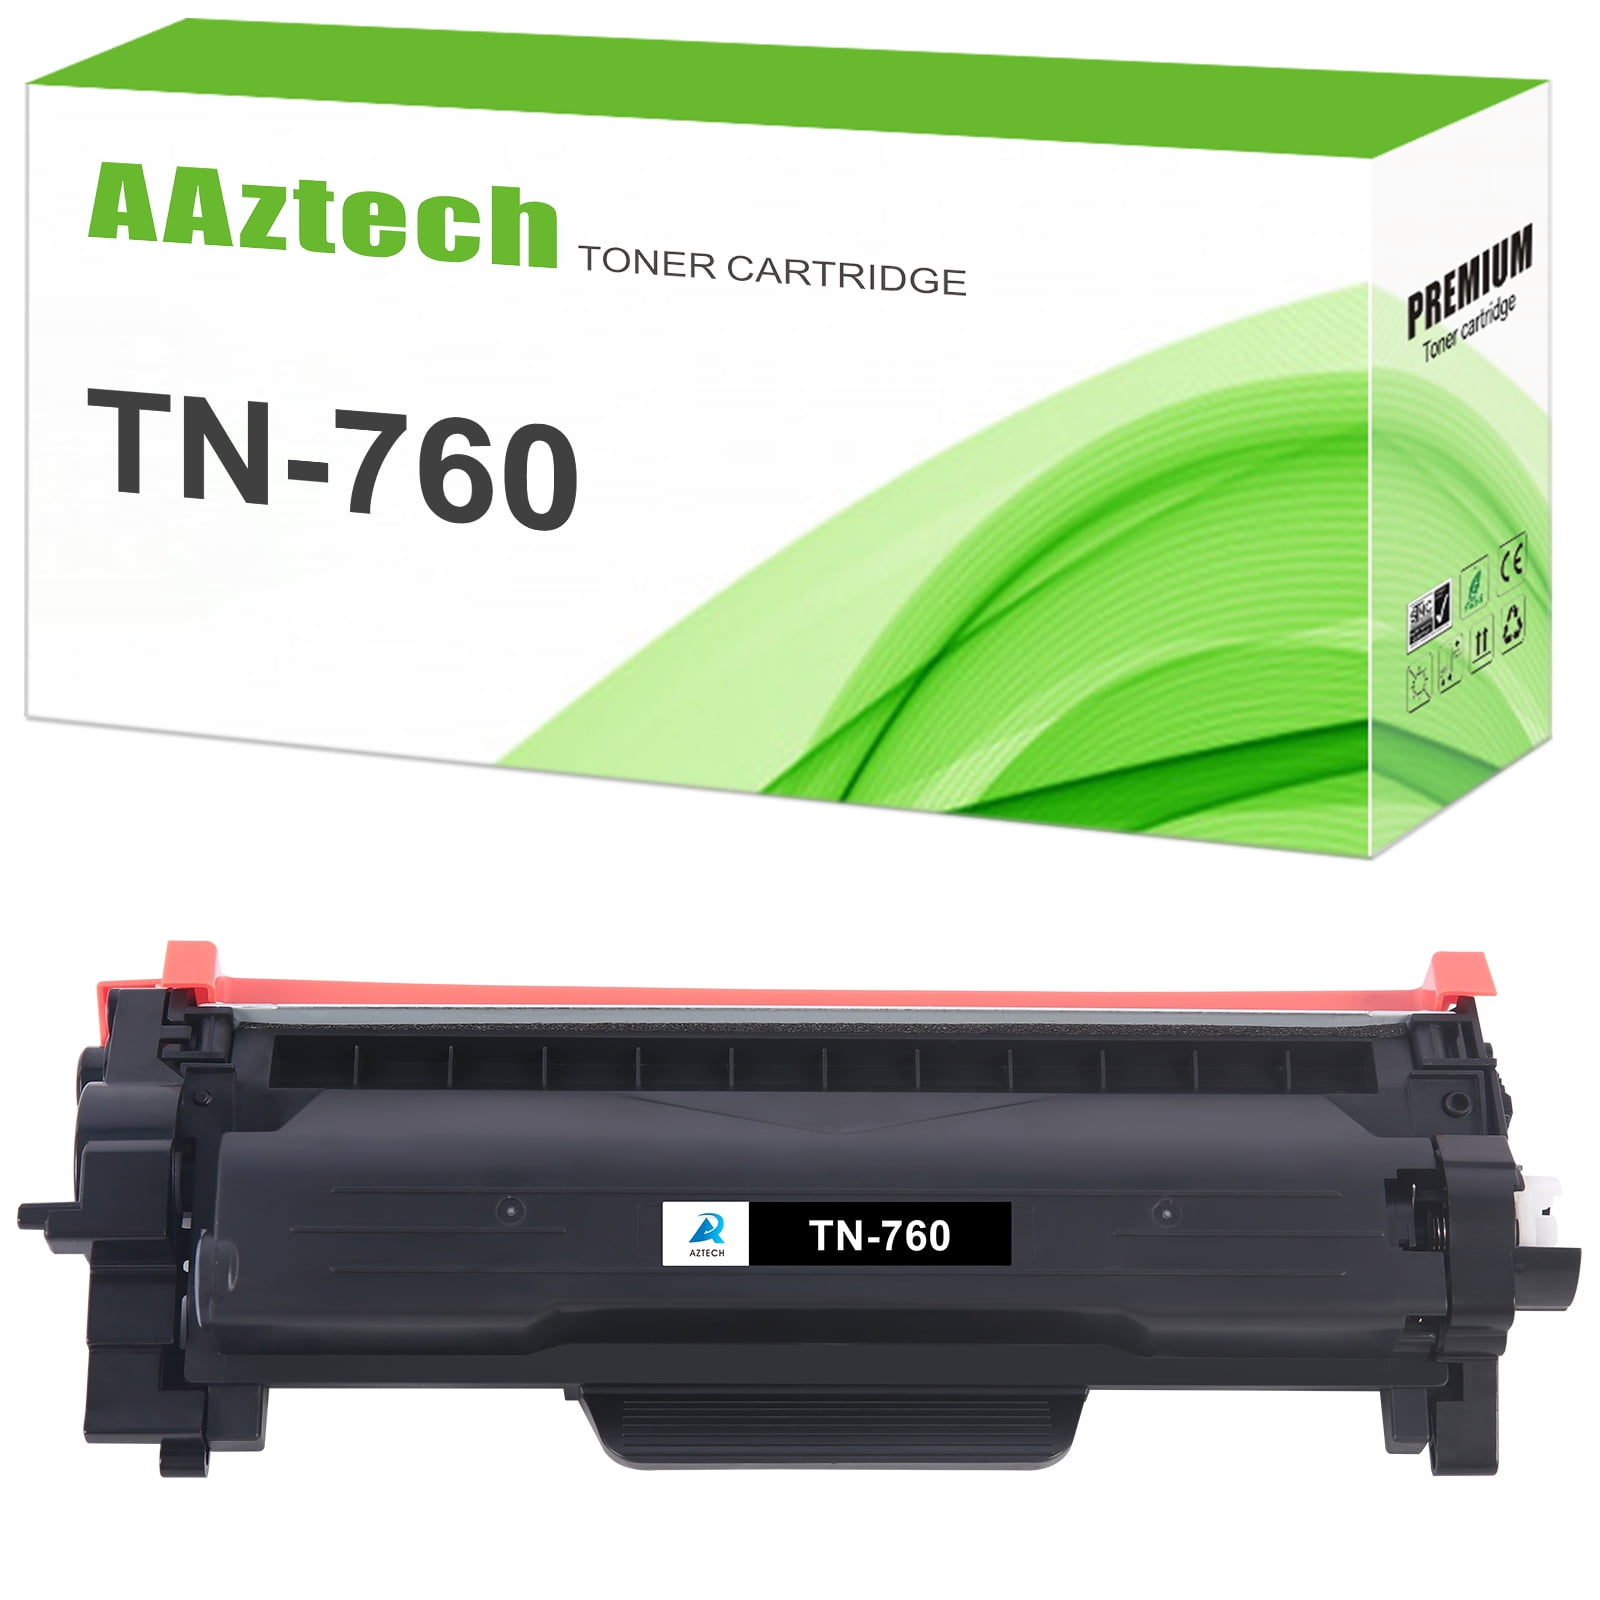 Black Toner Cartridge Compatible for Brother TN-760 TN760 TN730 HL-2395CDW MFC-L2750DW HL-2390DW HL-2350DW MFC-L2710DW HL-L2310D DCP-L2550DW DCP-L2530DW Printer Ink - Walmart.com